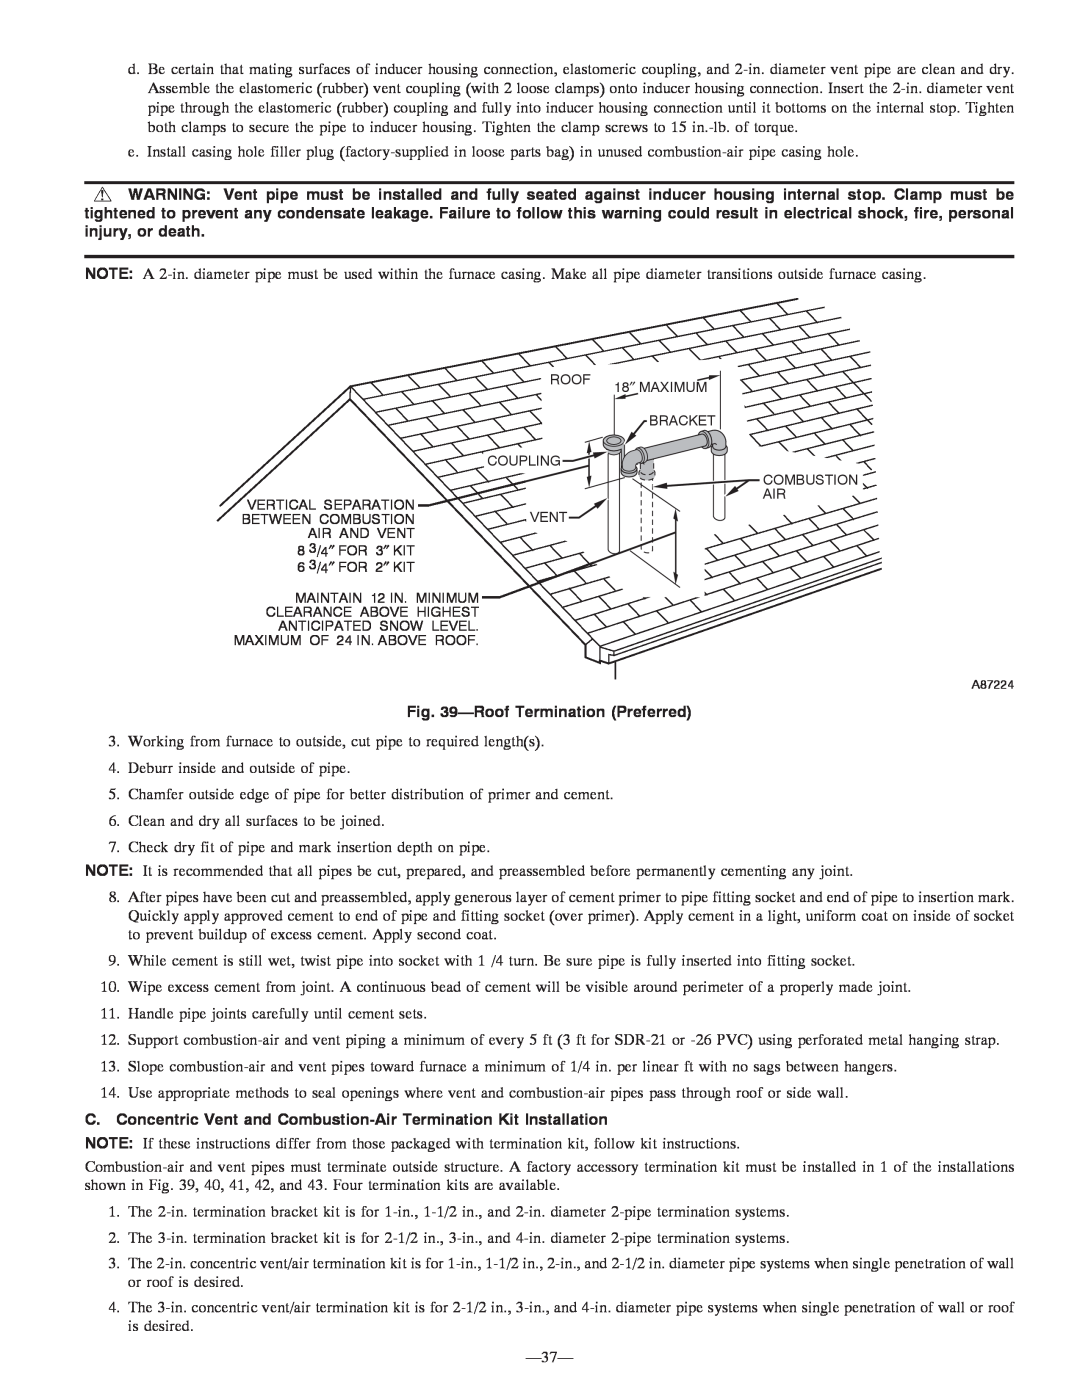 Bryant 355MAV instruction manual RoofTermination Preferred 